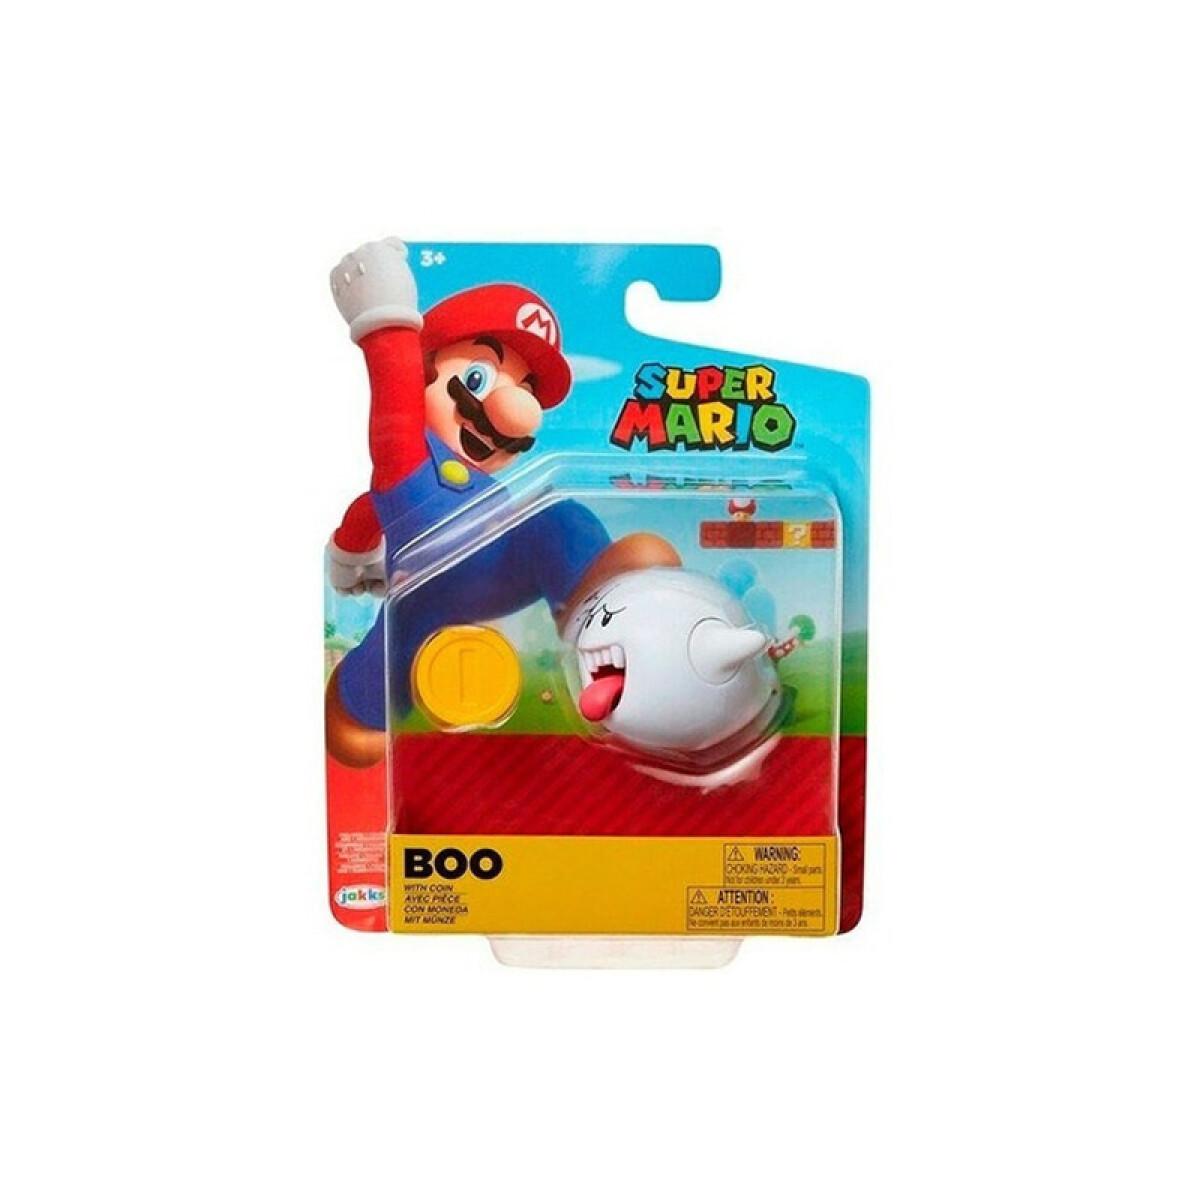 Super Mario - Boo 